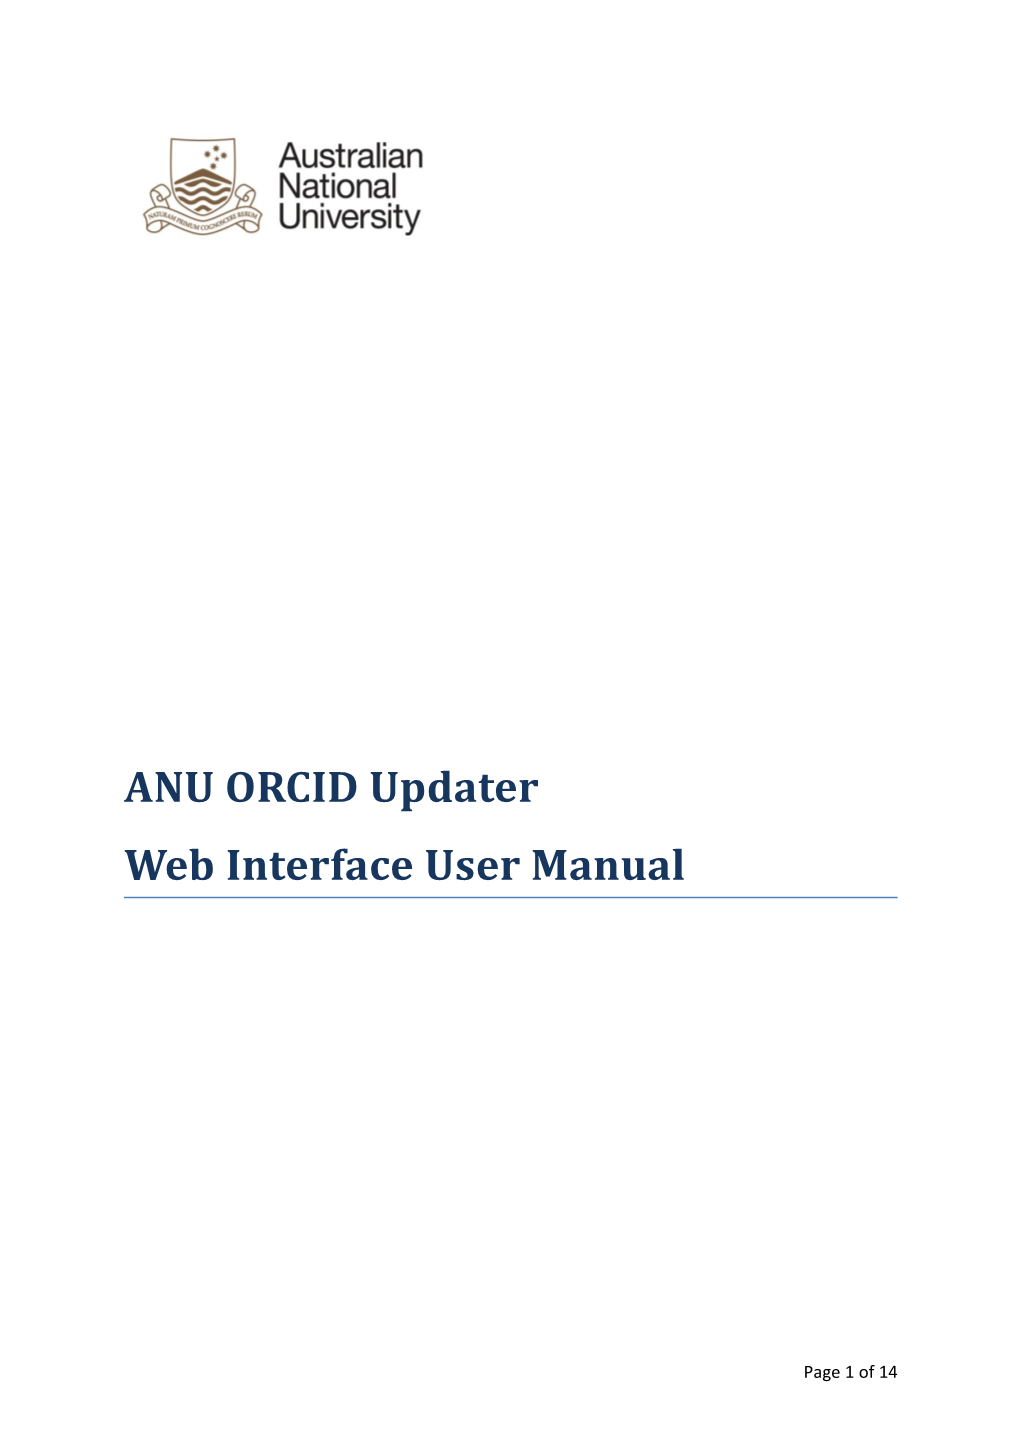 Web Interface User Manual